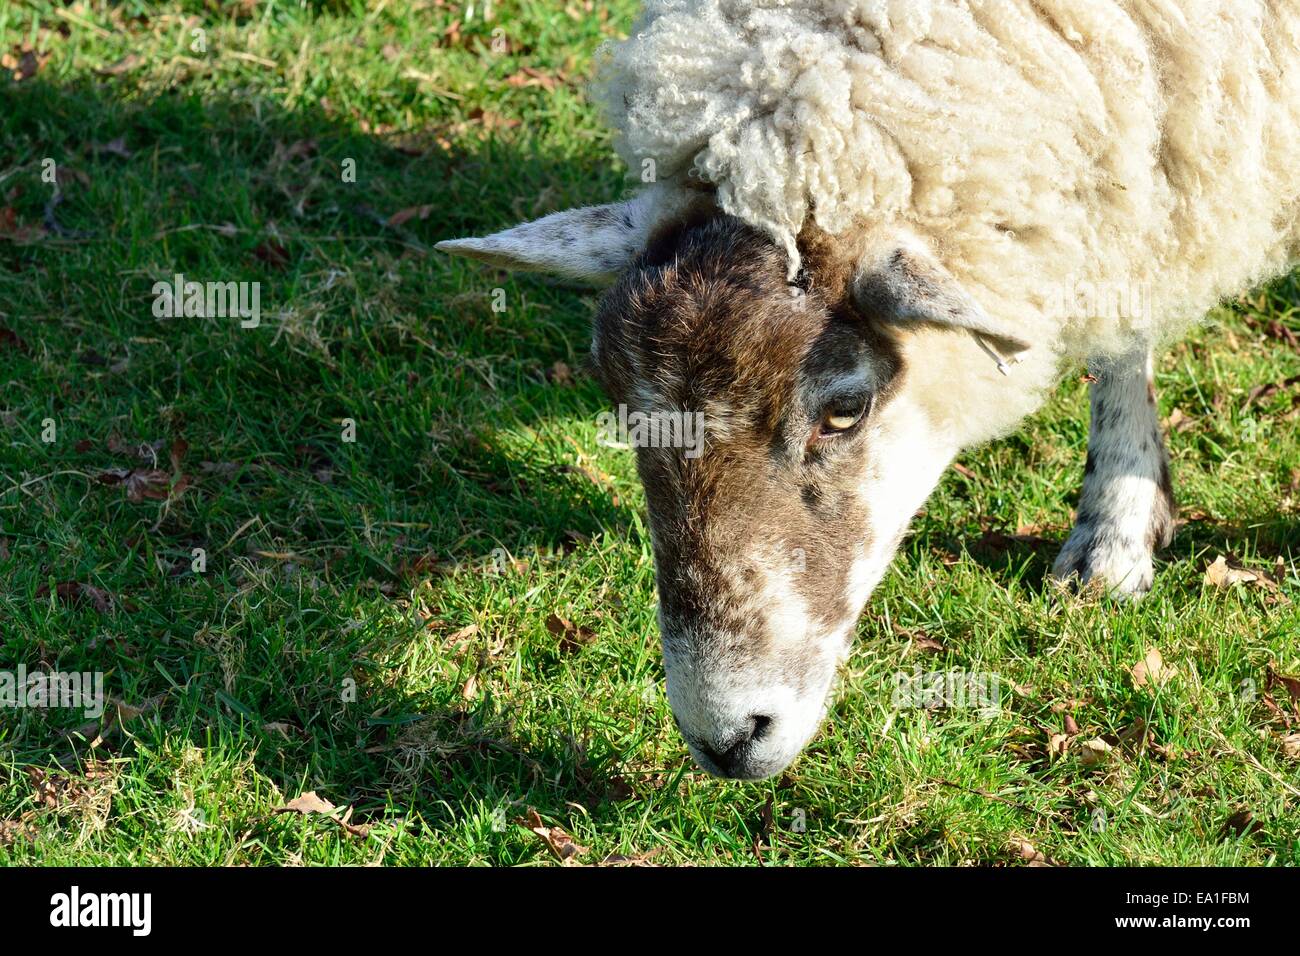 Sheep feeding on grass Stock Photo